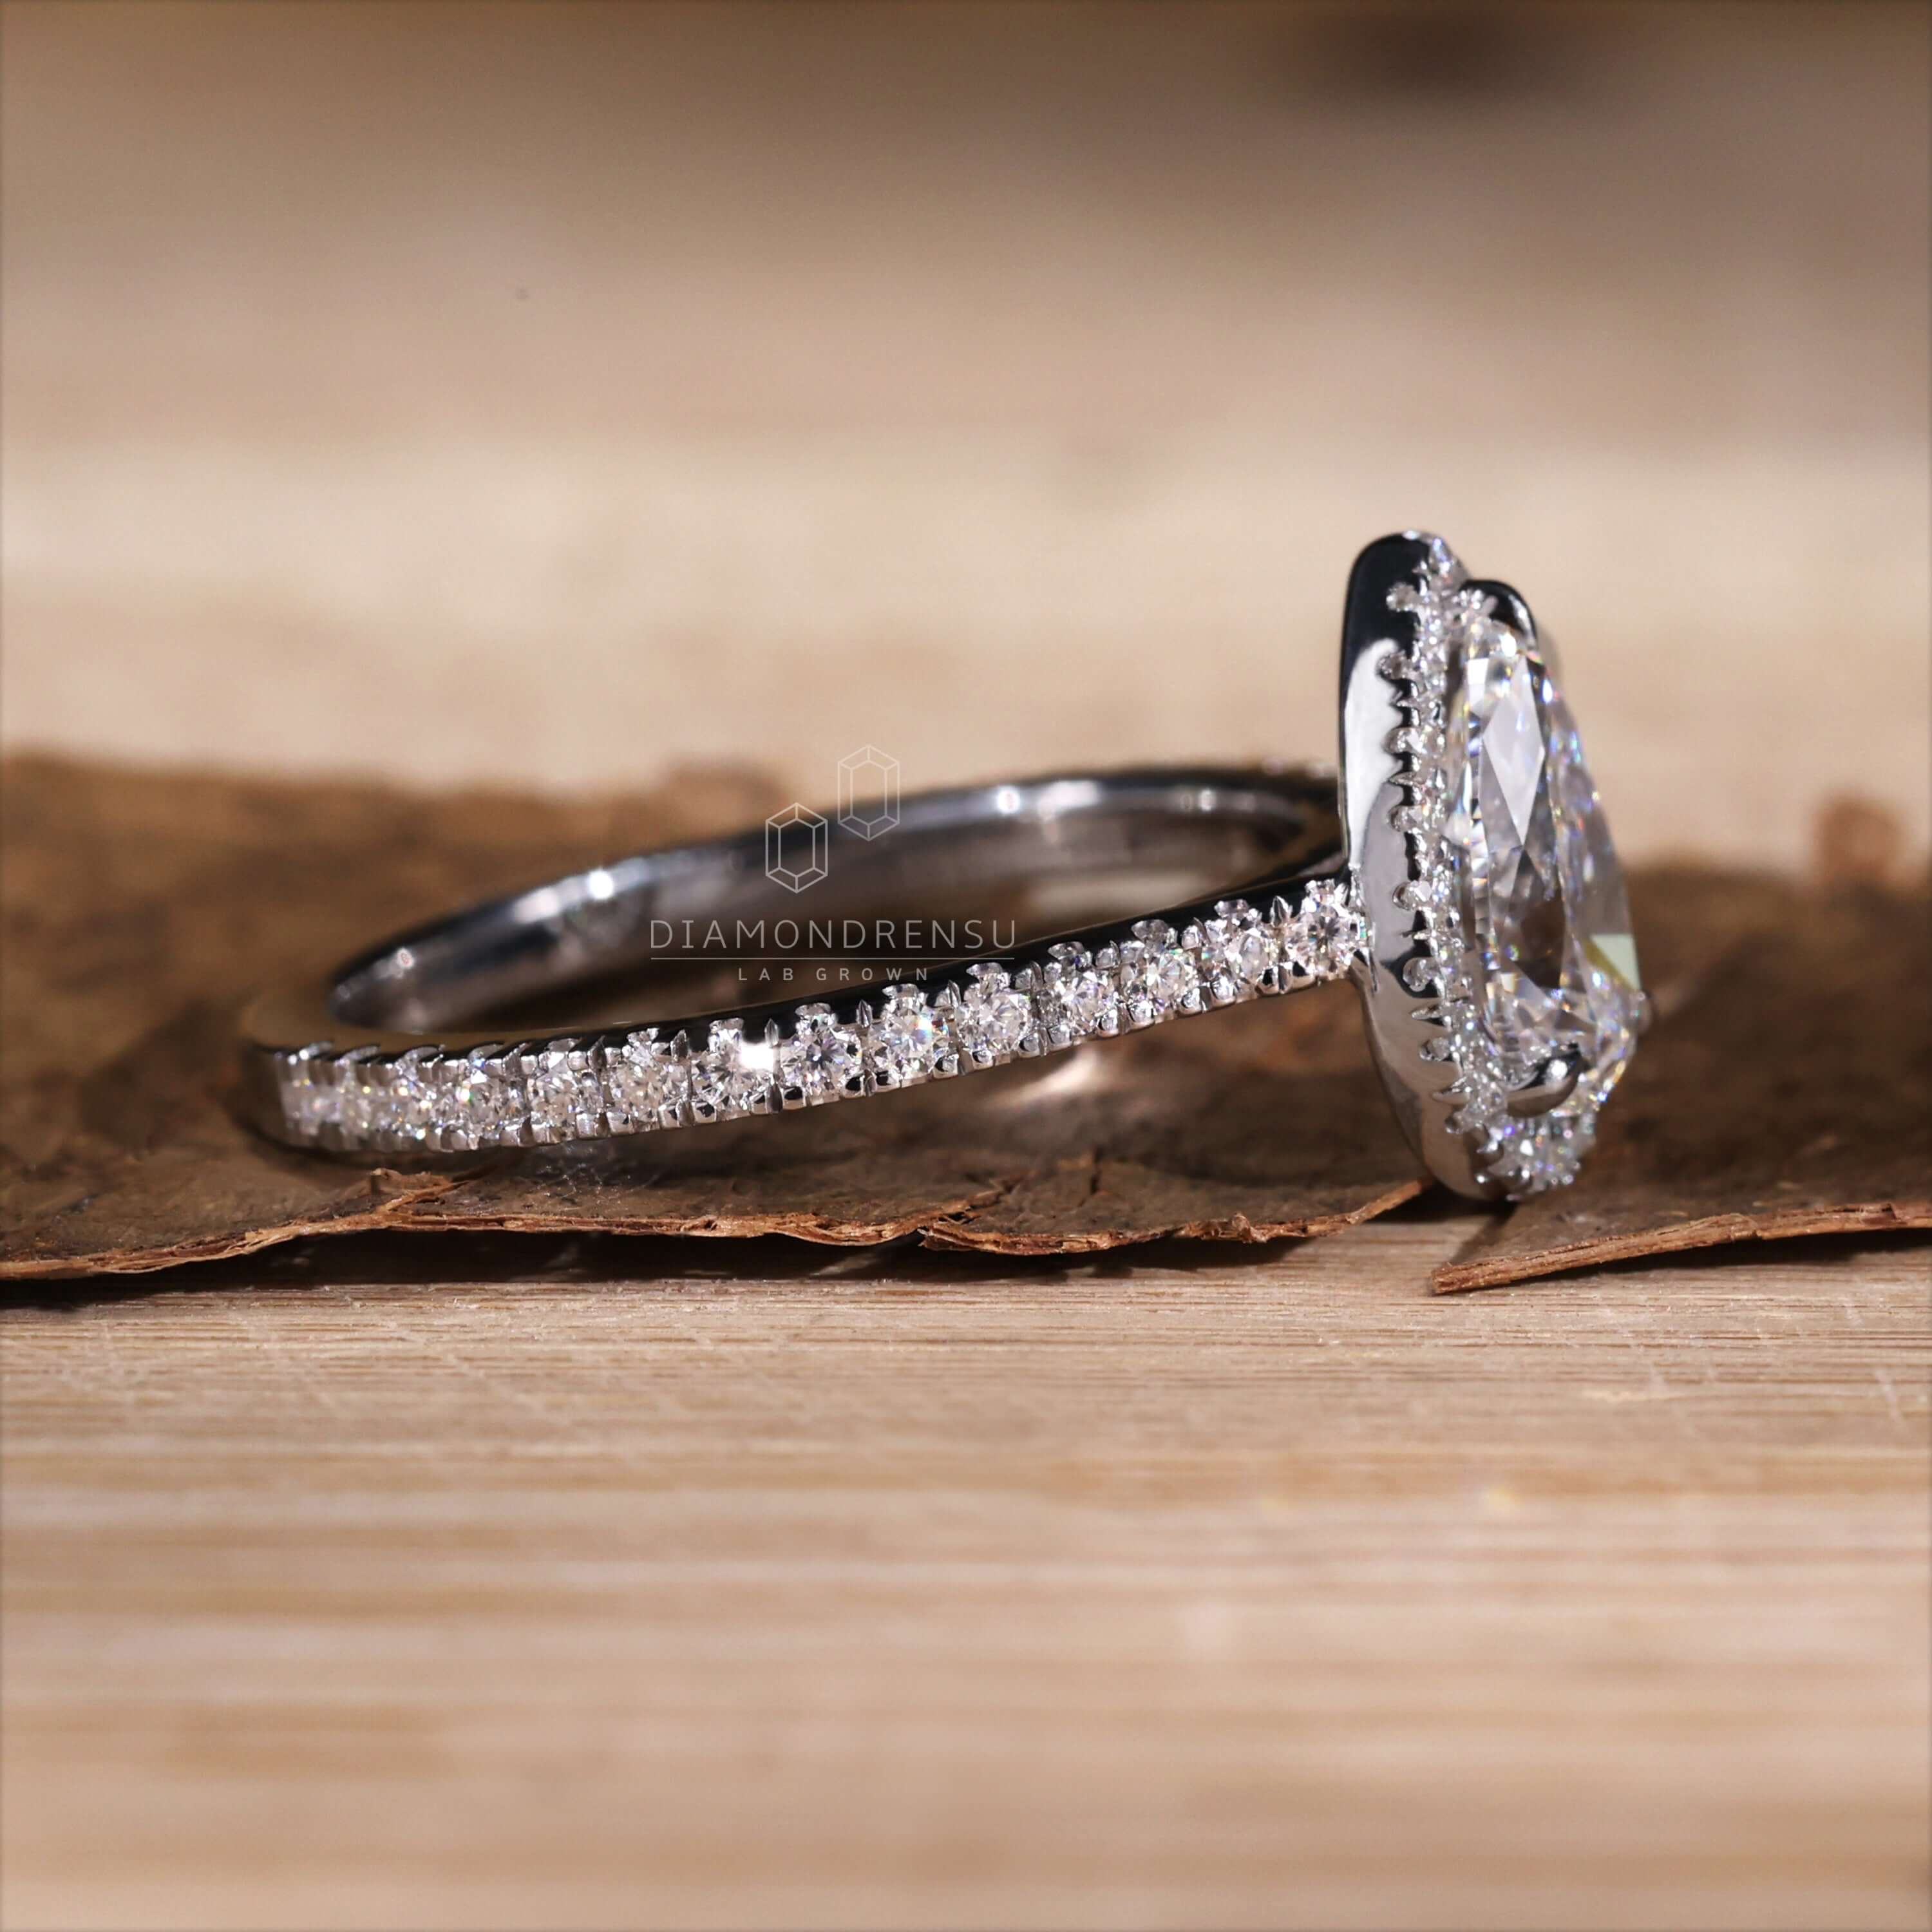 Quality Engagement Ring in Ikotun/Igando - Wedding Wear & Accessories,  Subomi Adeniji | Jiji.ng